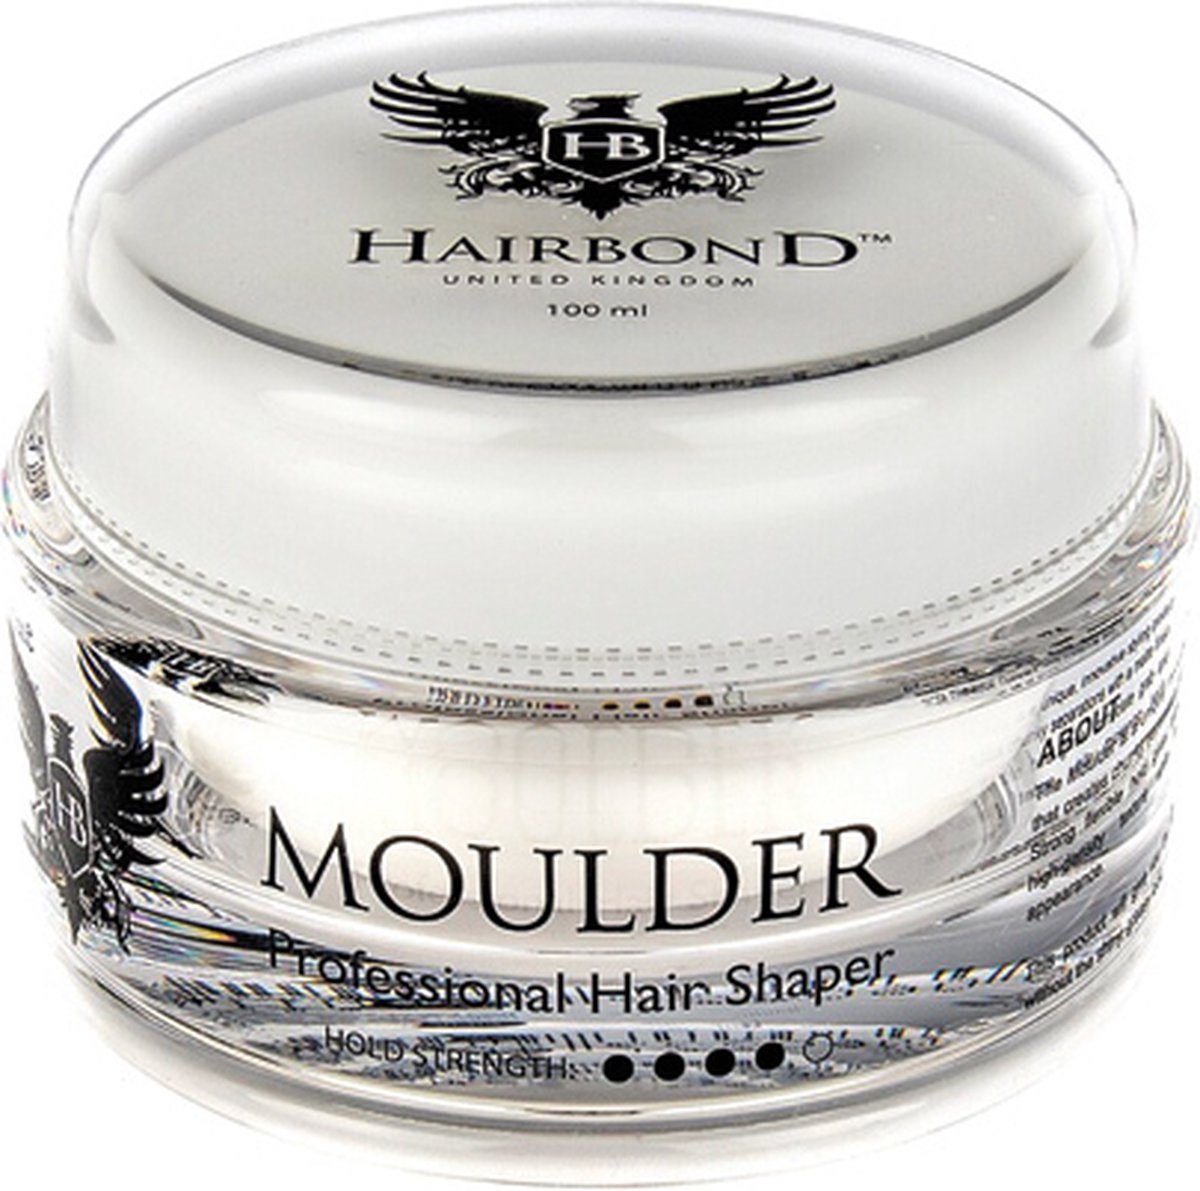 Hairbond Moulder Professional Hair Shaper 100 ml.